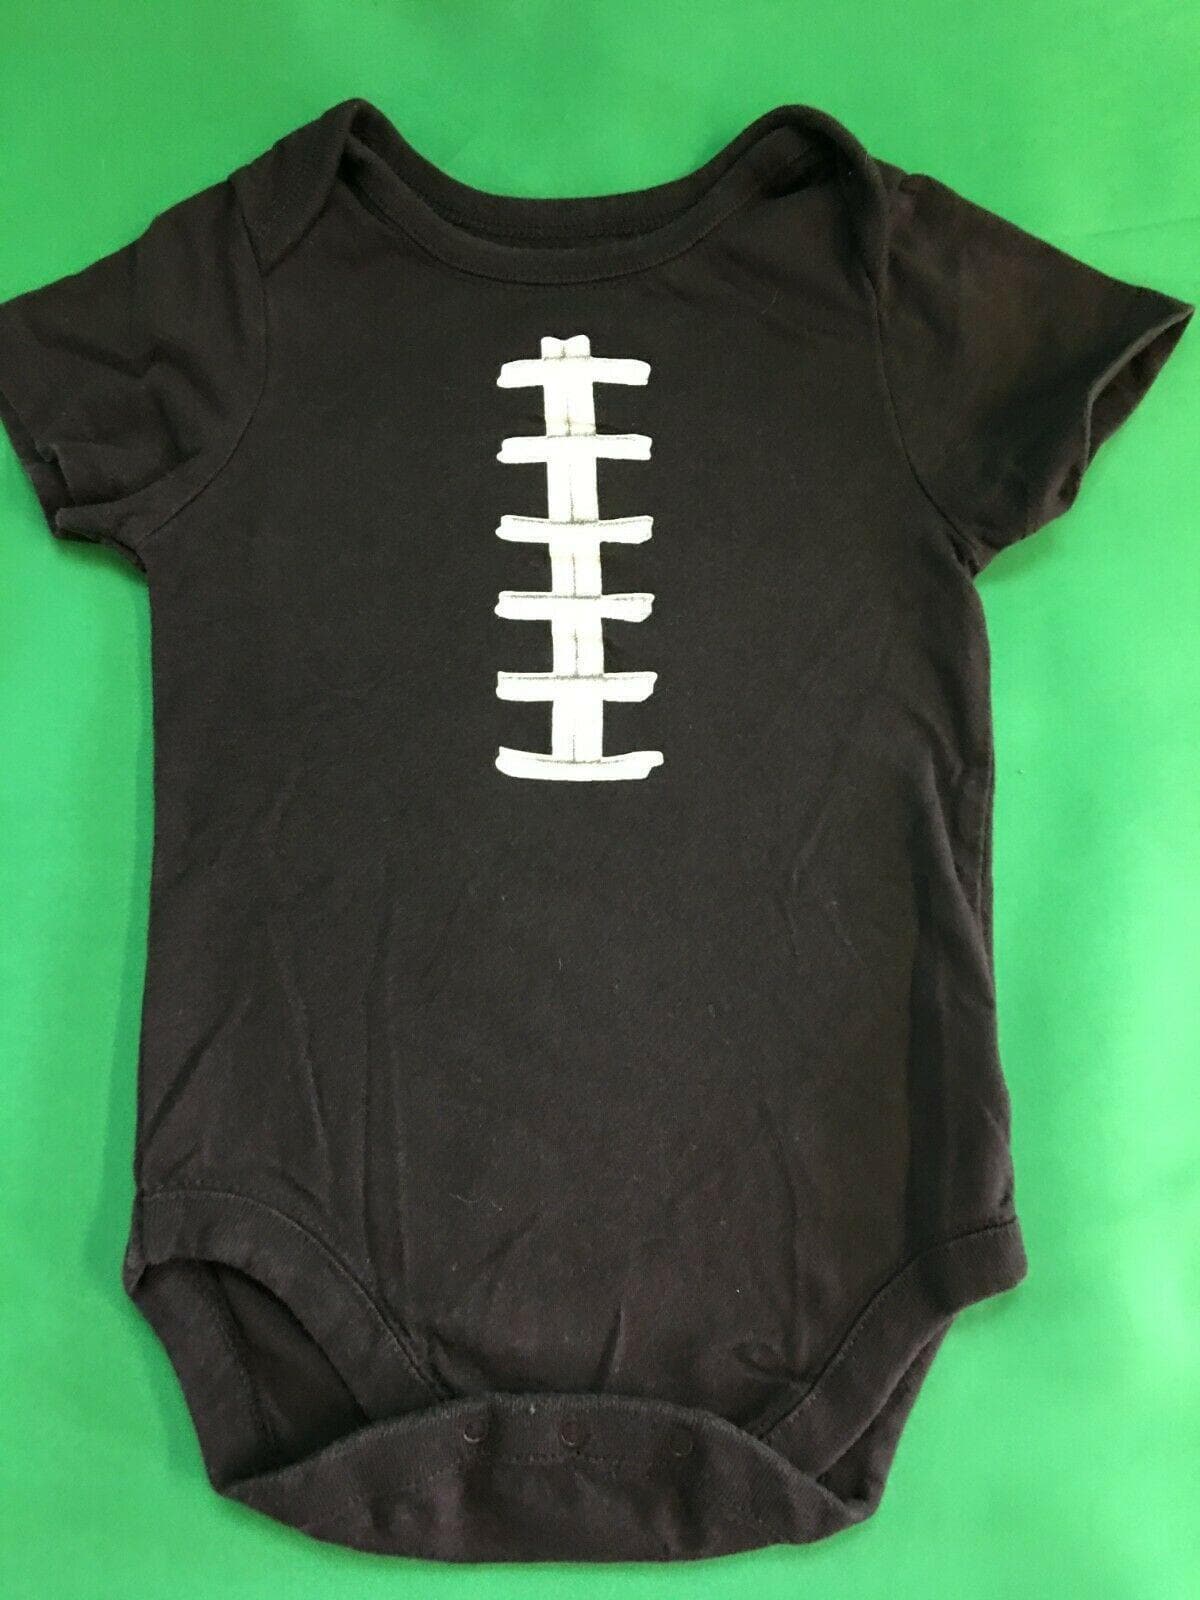 NFL NCAA American Football Bodysuit/Vest Toddler 12-18 Months